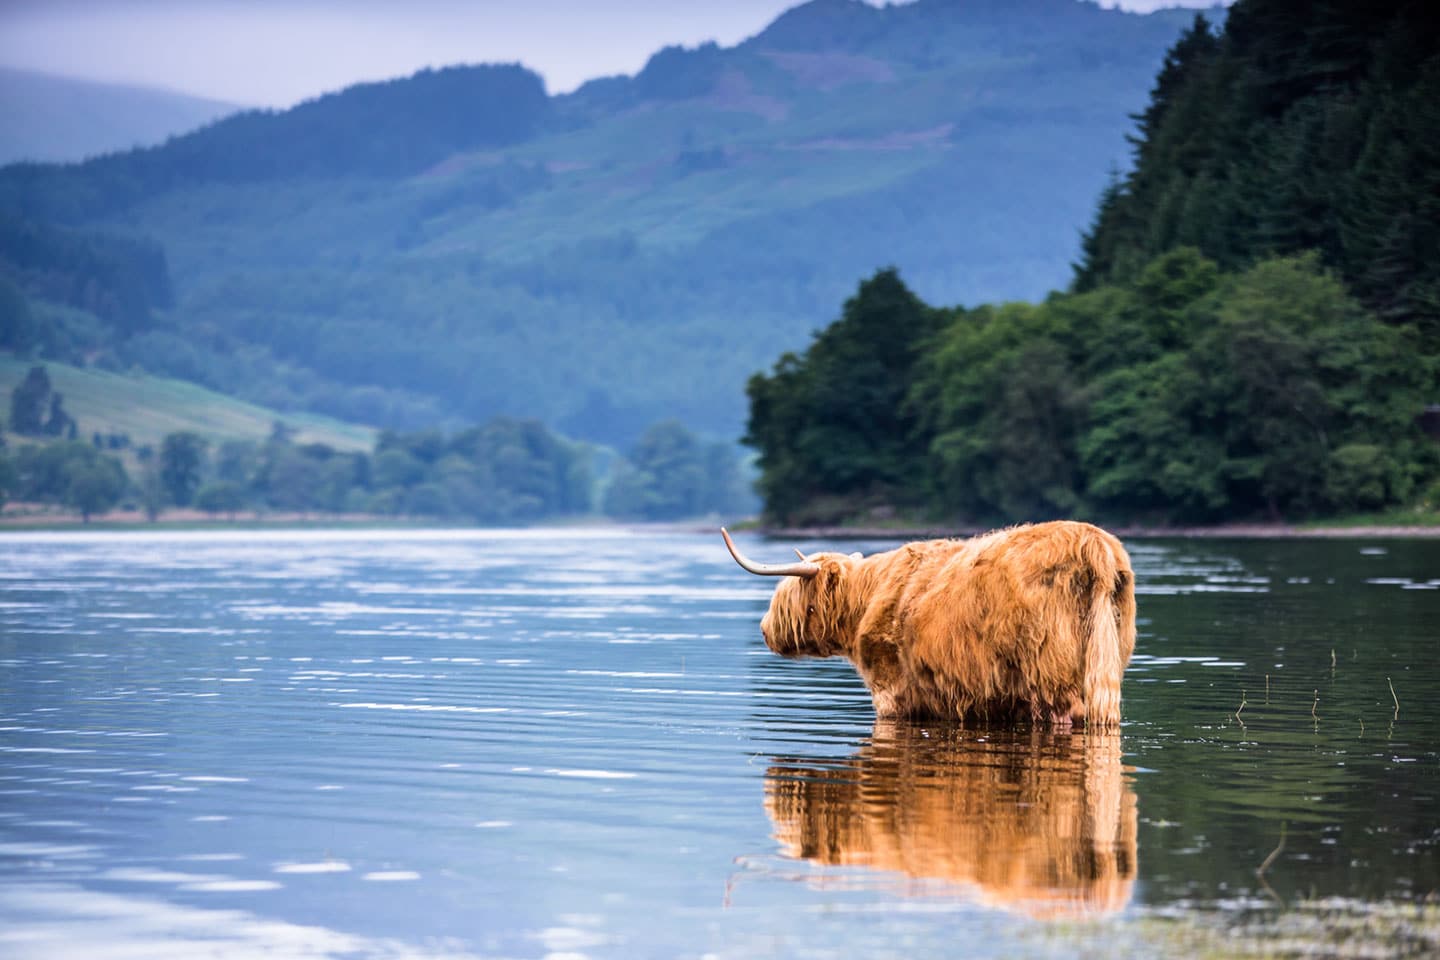 Wild Scottish Highland cow at a lake in Scotland